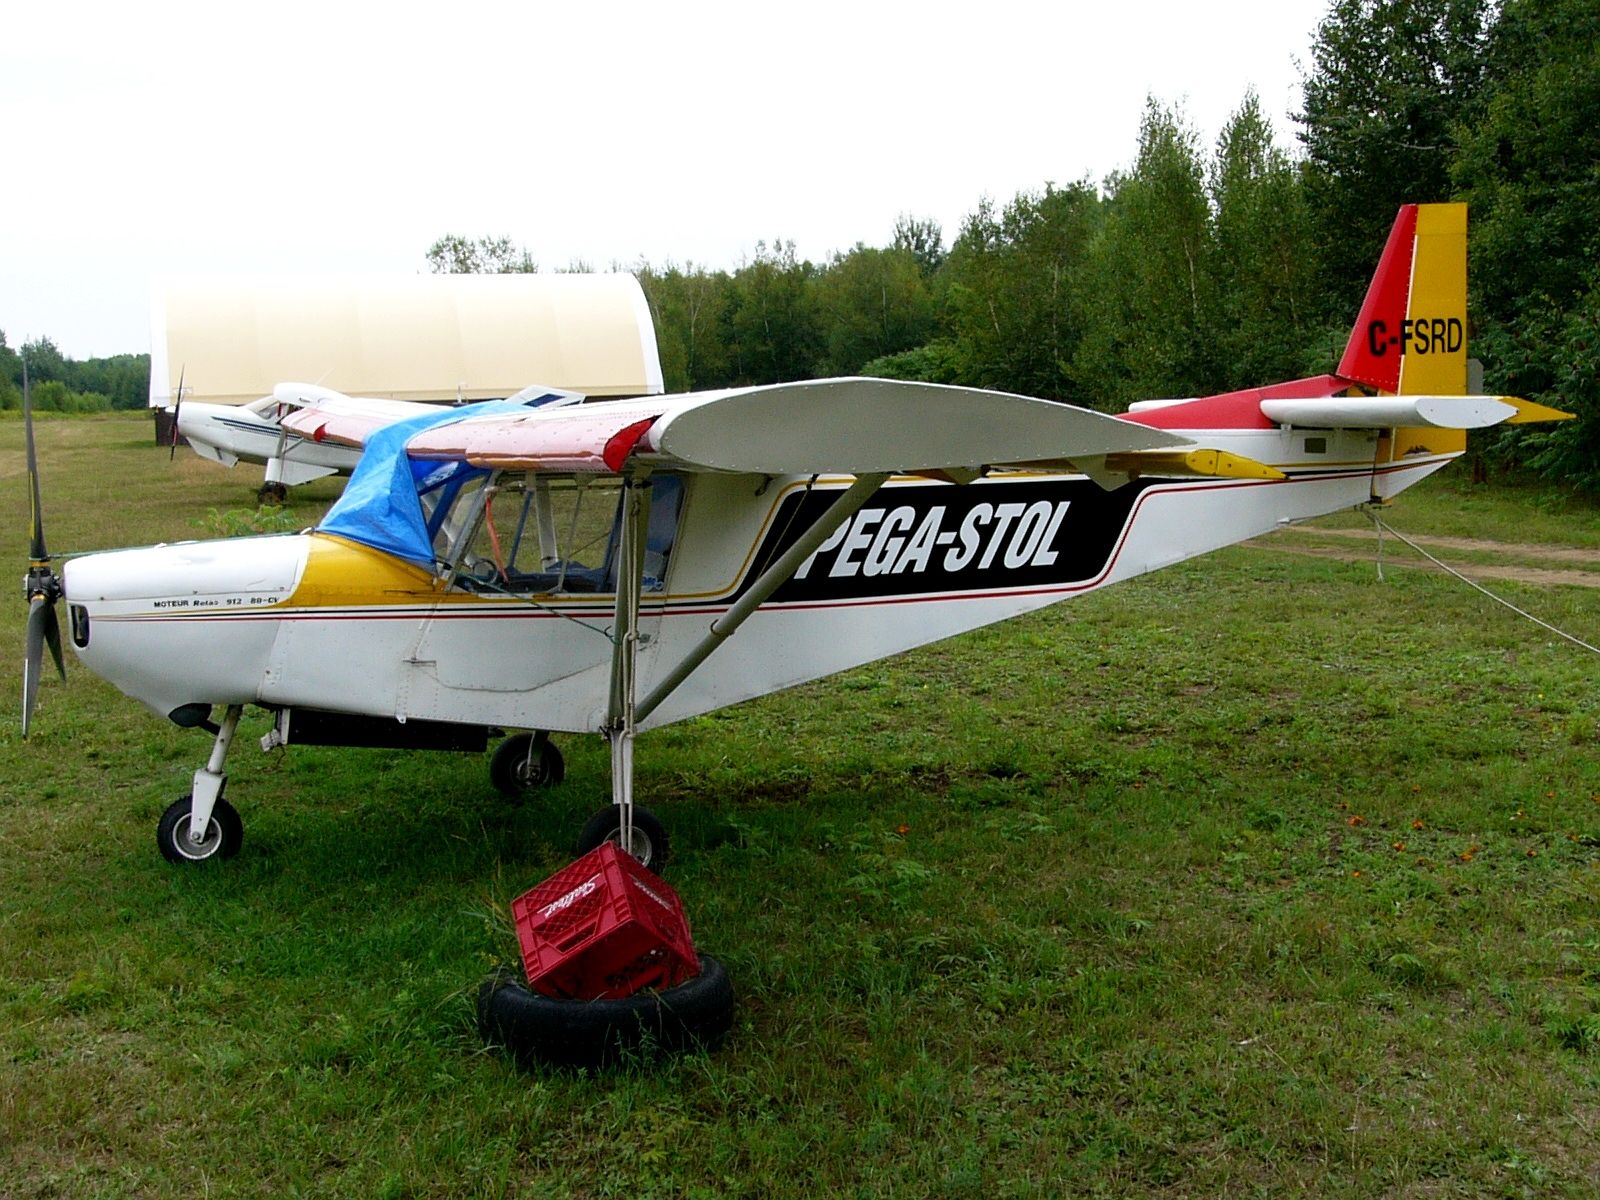 Zenair_CH-701_amateur-built_with_Pega-stol_wing_C-FSRD_01.JPG